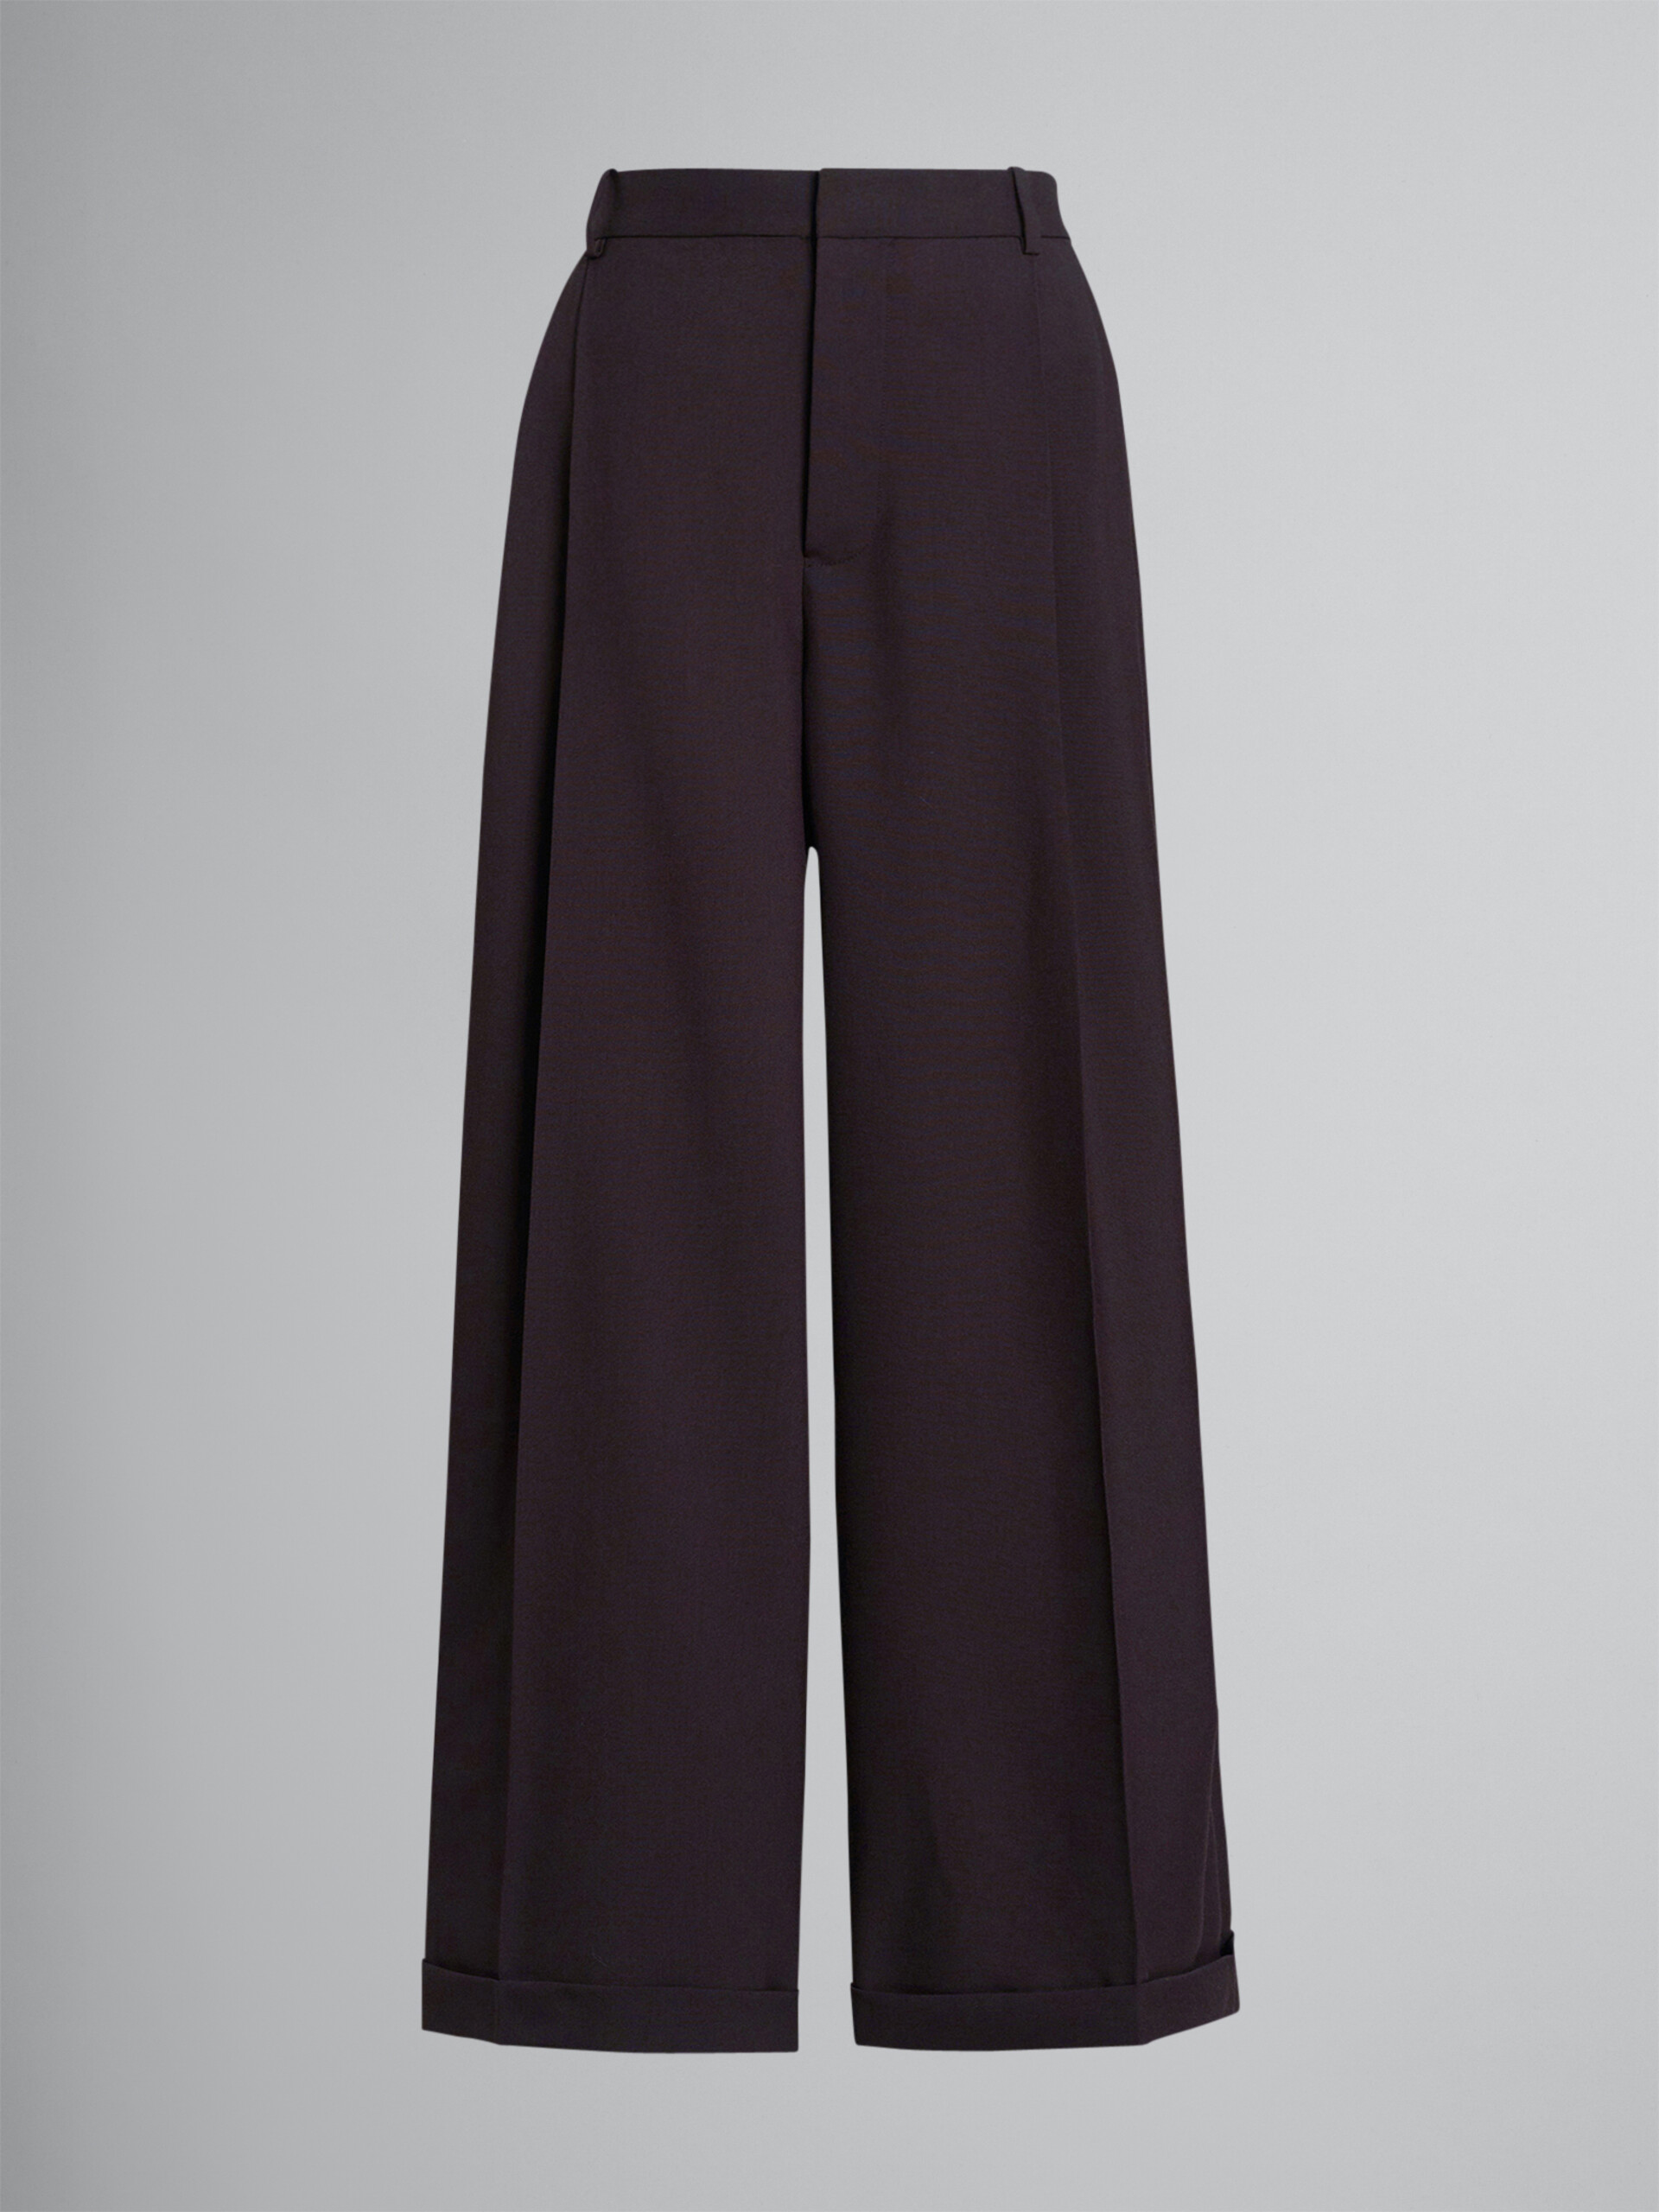 Brown tropical wool palazzo pants - Pants - Image 1